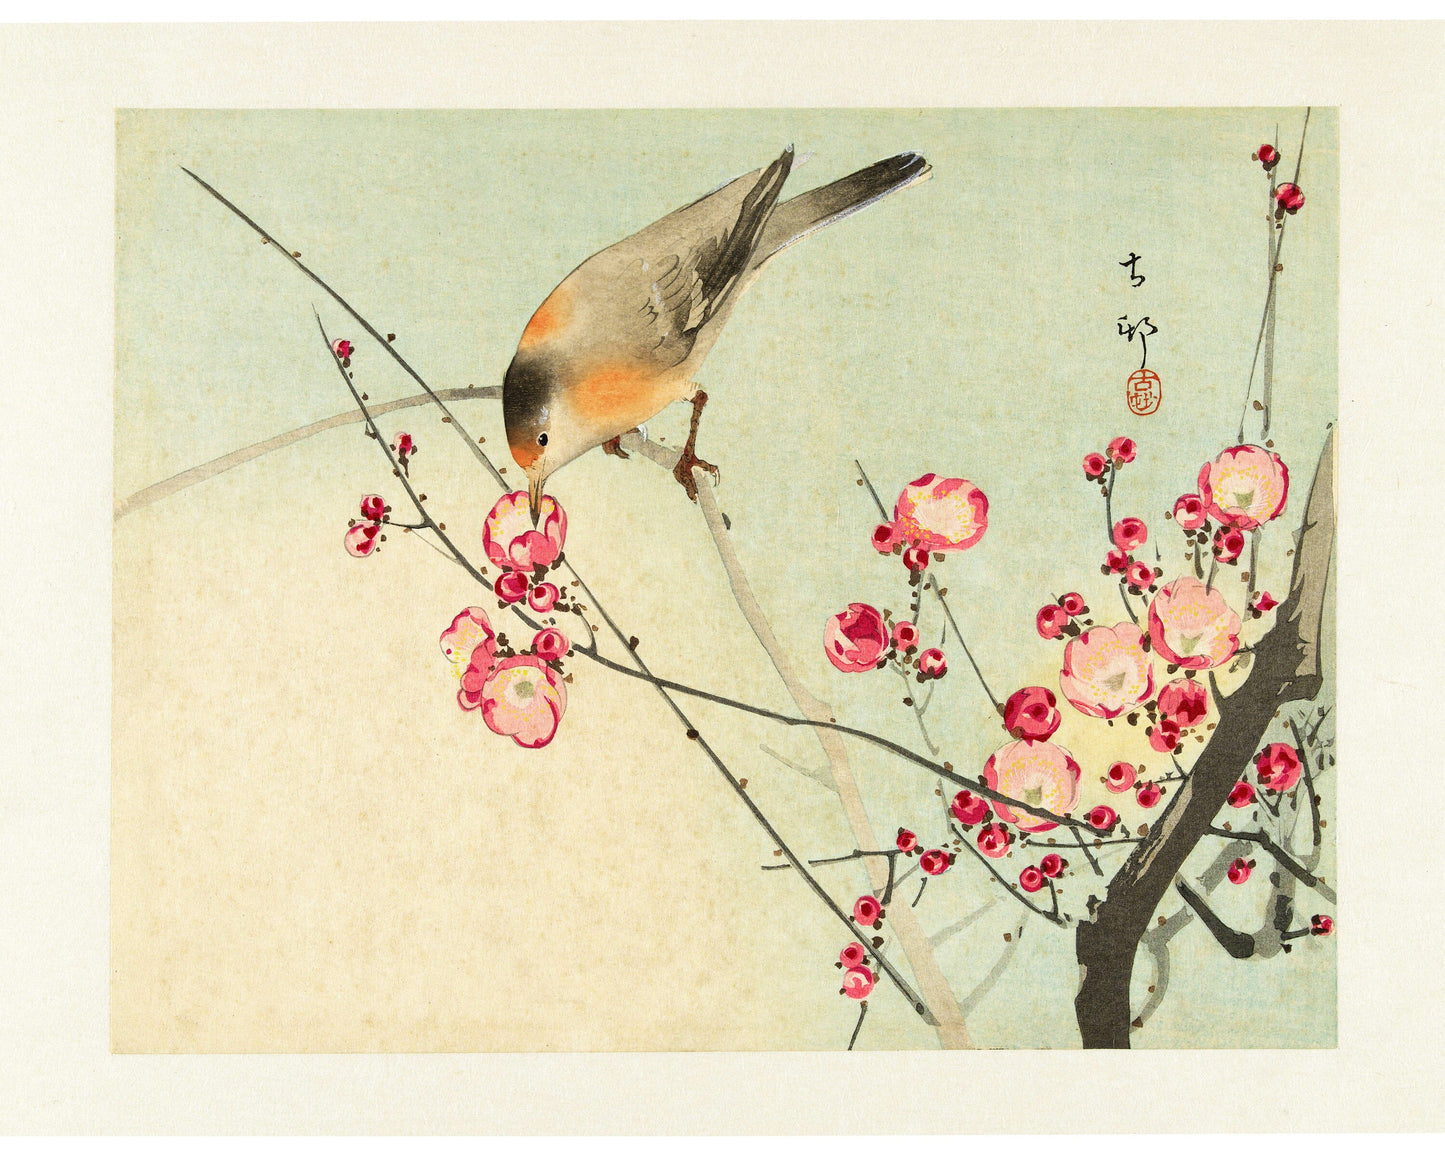 Vintage songbird on blossom branch  | Giclée fine art print | Animal and nature art | Modern Vintage decor | Eco-friendly gift